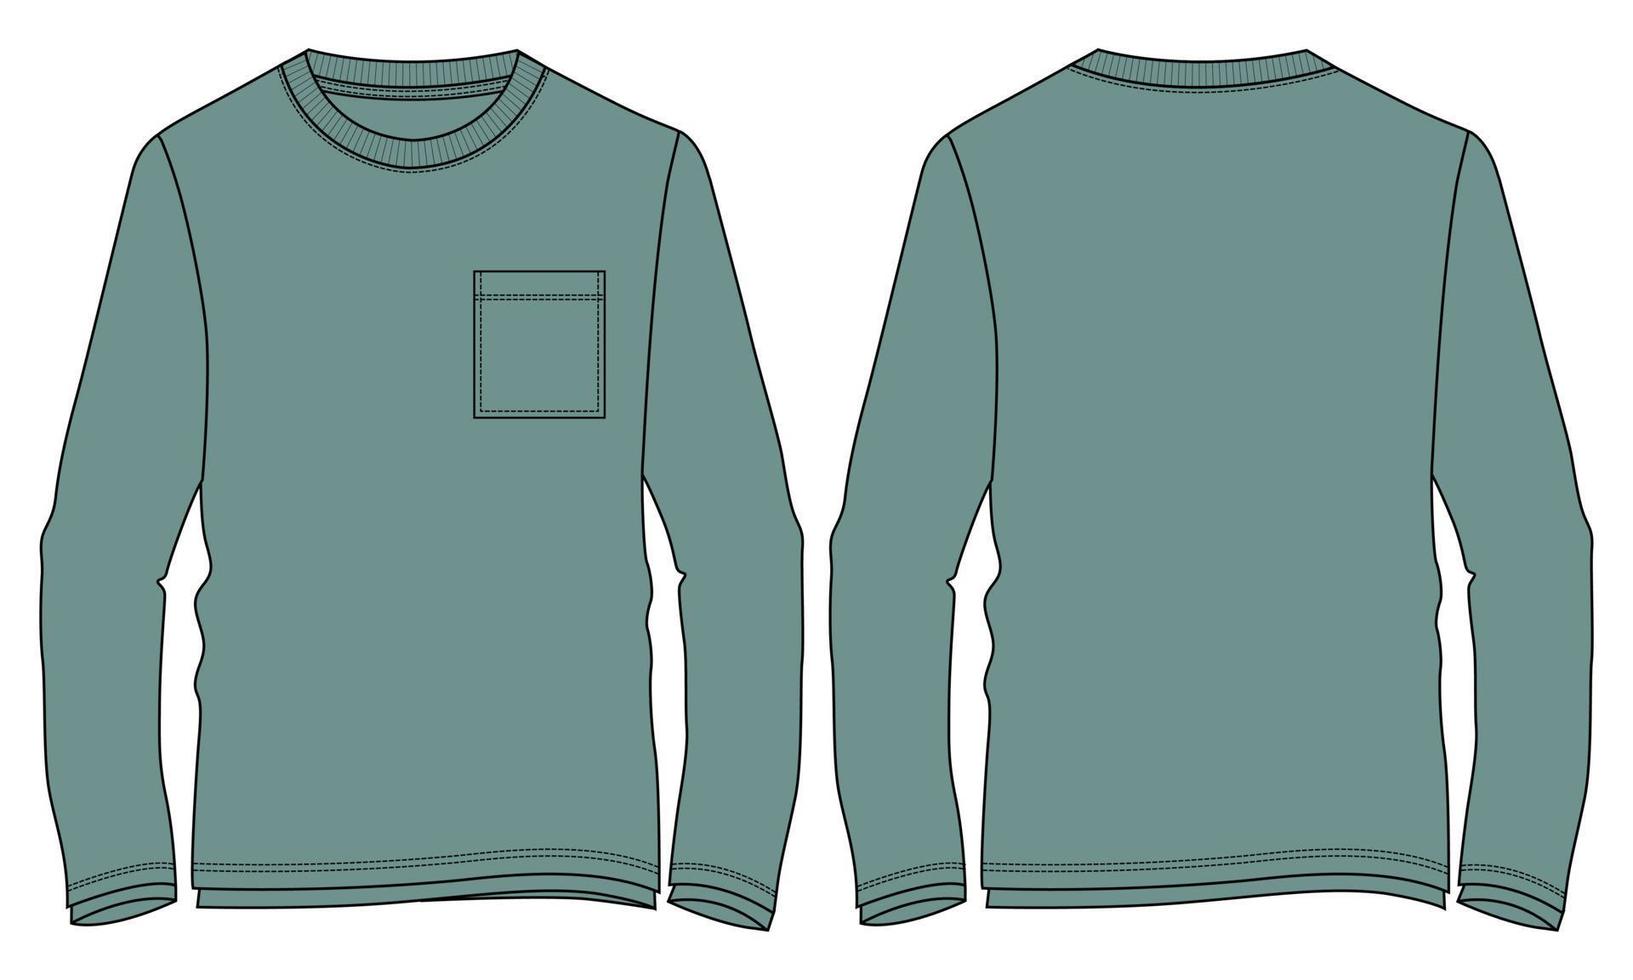 camiseta de manga larga moda técnica boceto plano ilustración vectorial plantilla de color verde vector